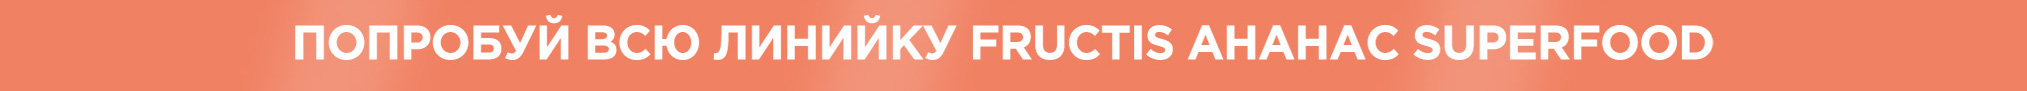 Garnier Fructis SuperFood